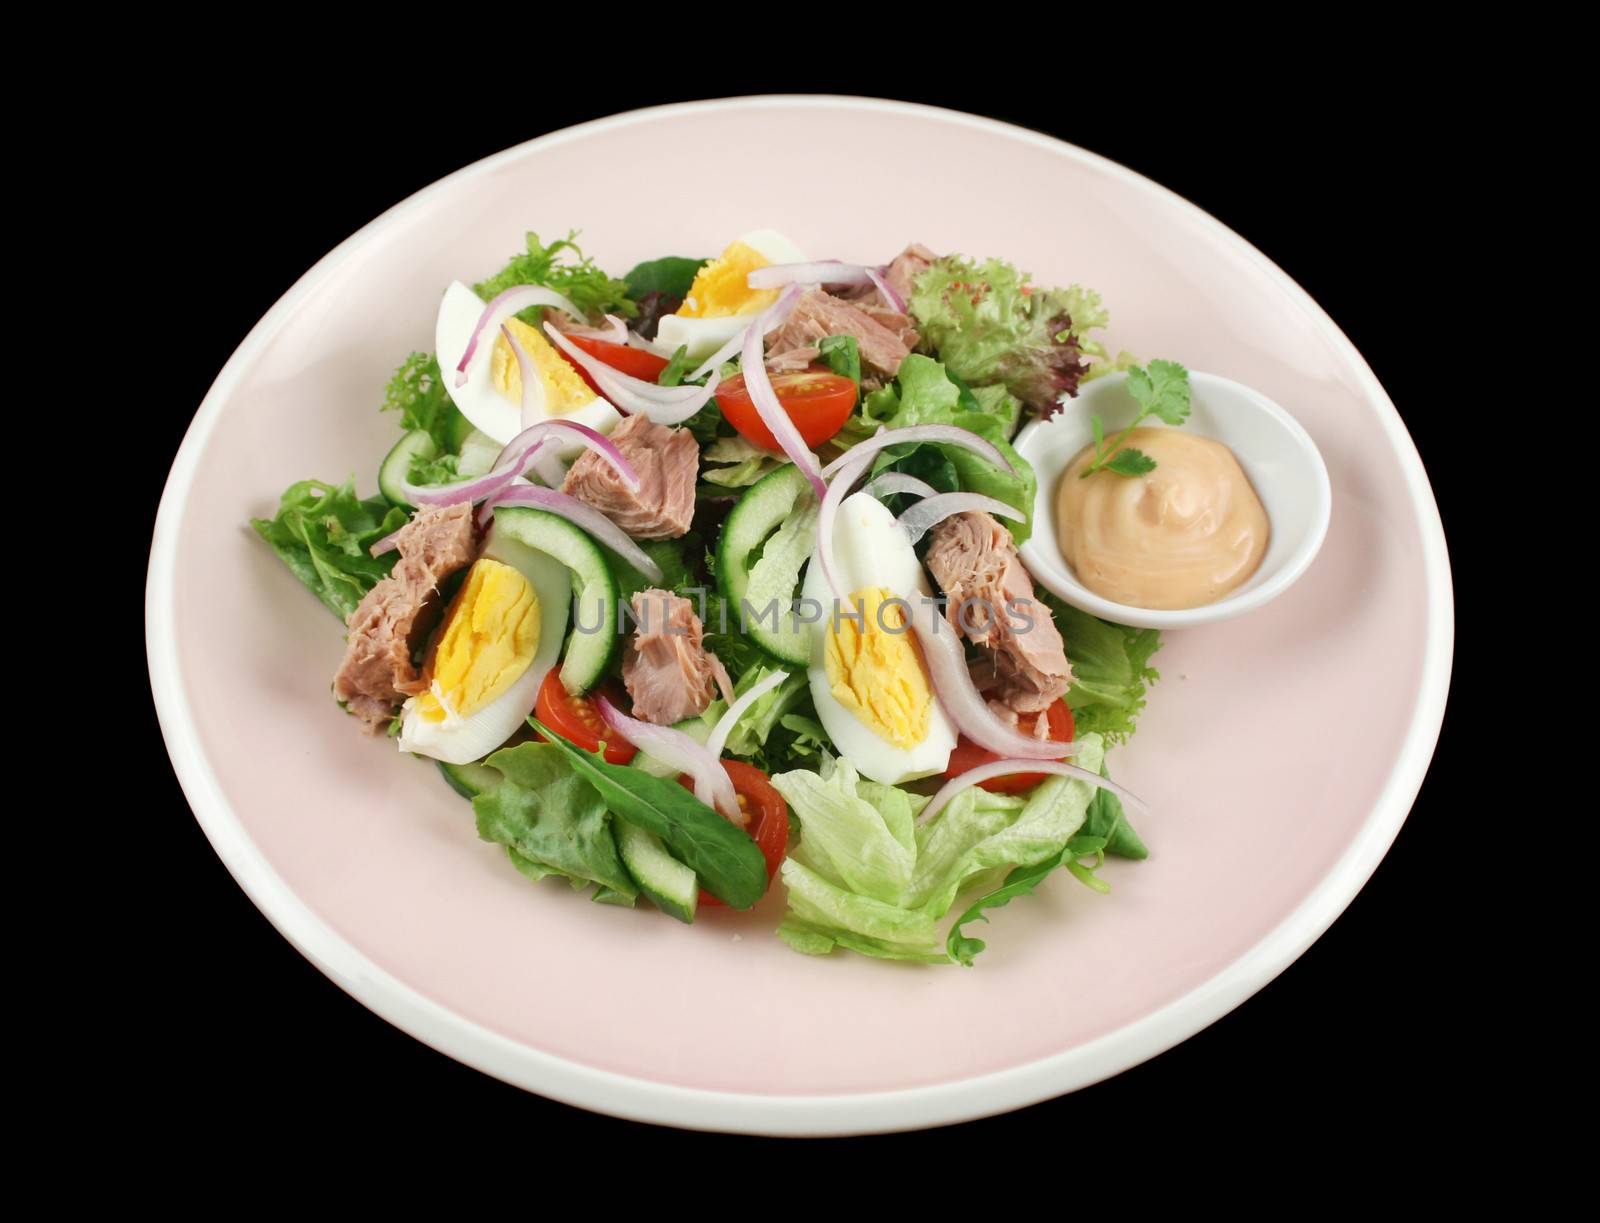 Tuna And Egg Salad by jabiru